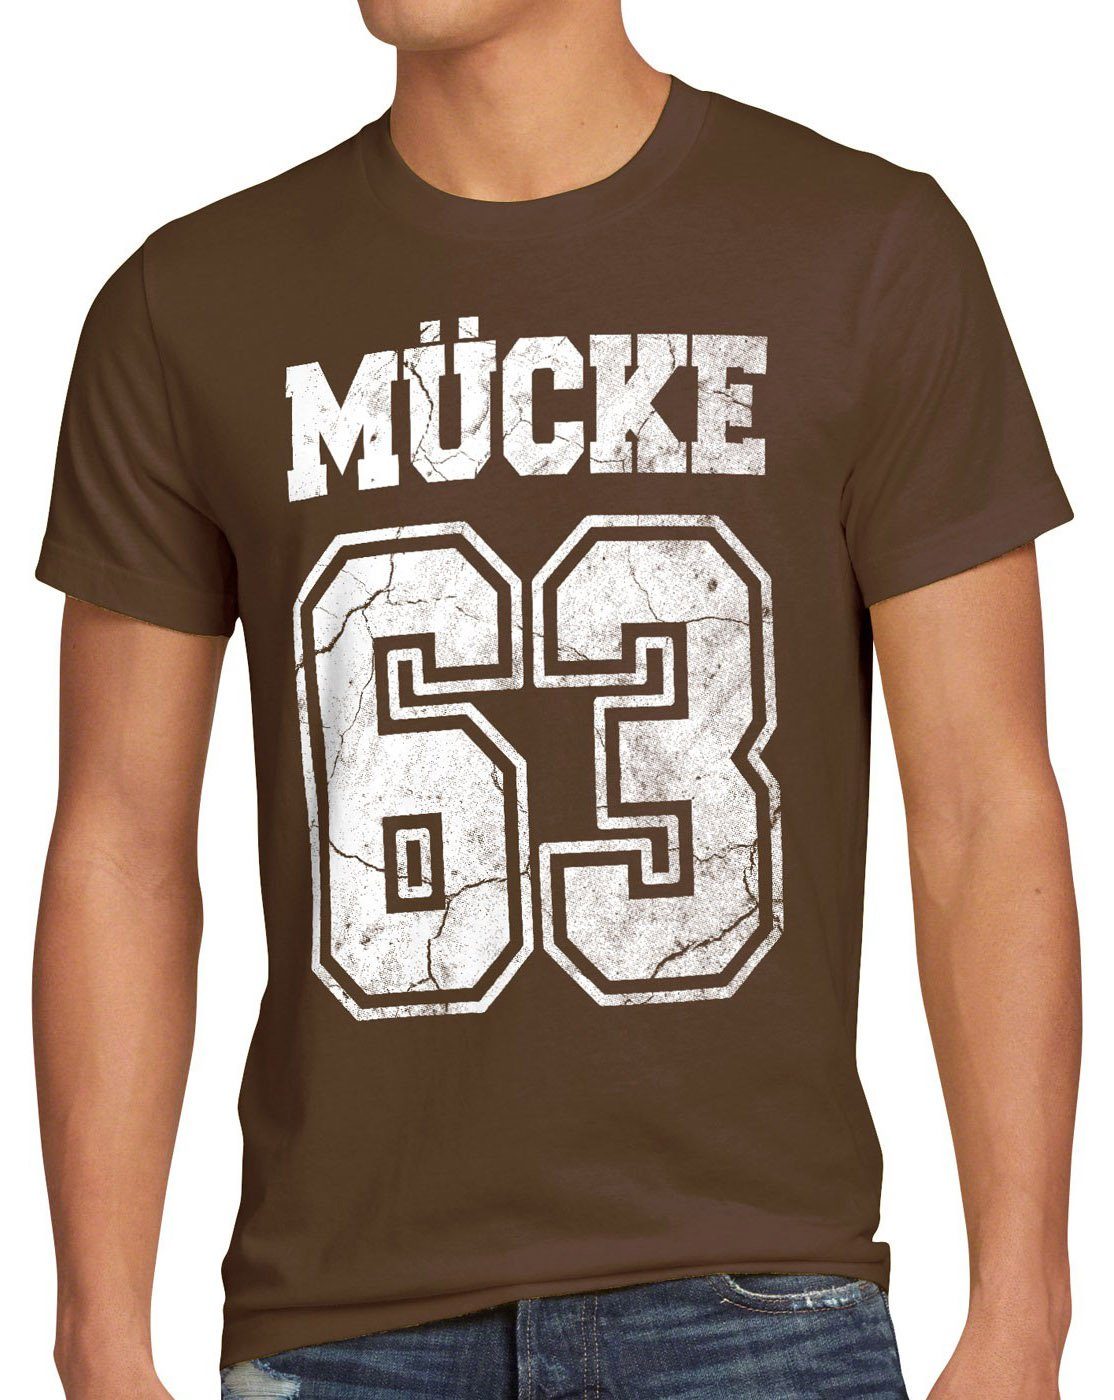 Print-Shirt T-Shirt star film Herren 63 movie Mücke style3 braun bulldozer